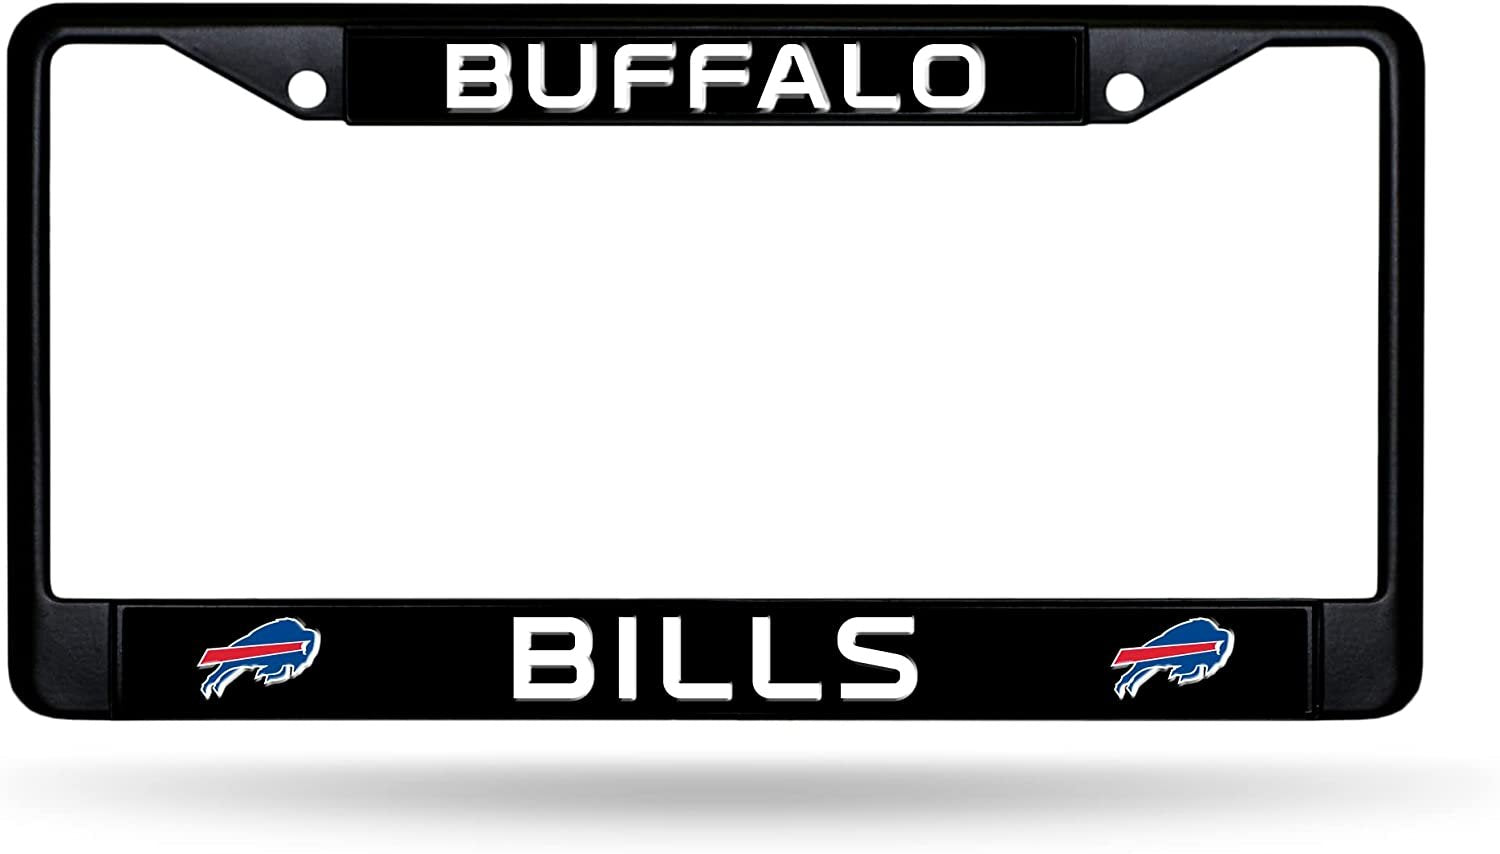 Buffalo Bills Black Metal License Plate Frame Chrome Tag Cover 6x12 Inch